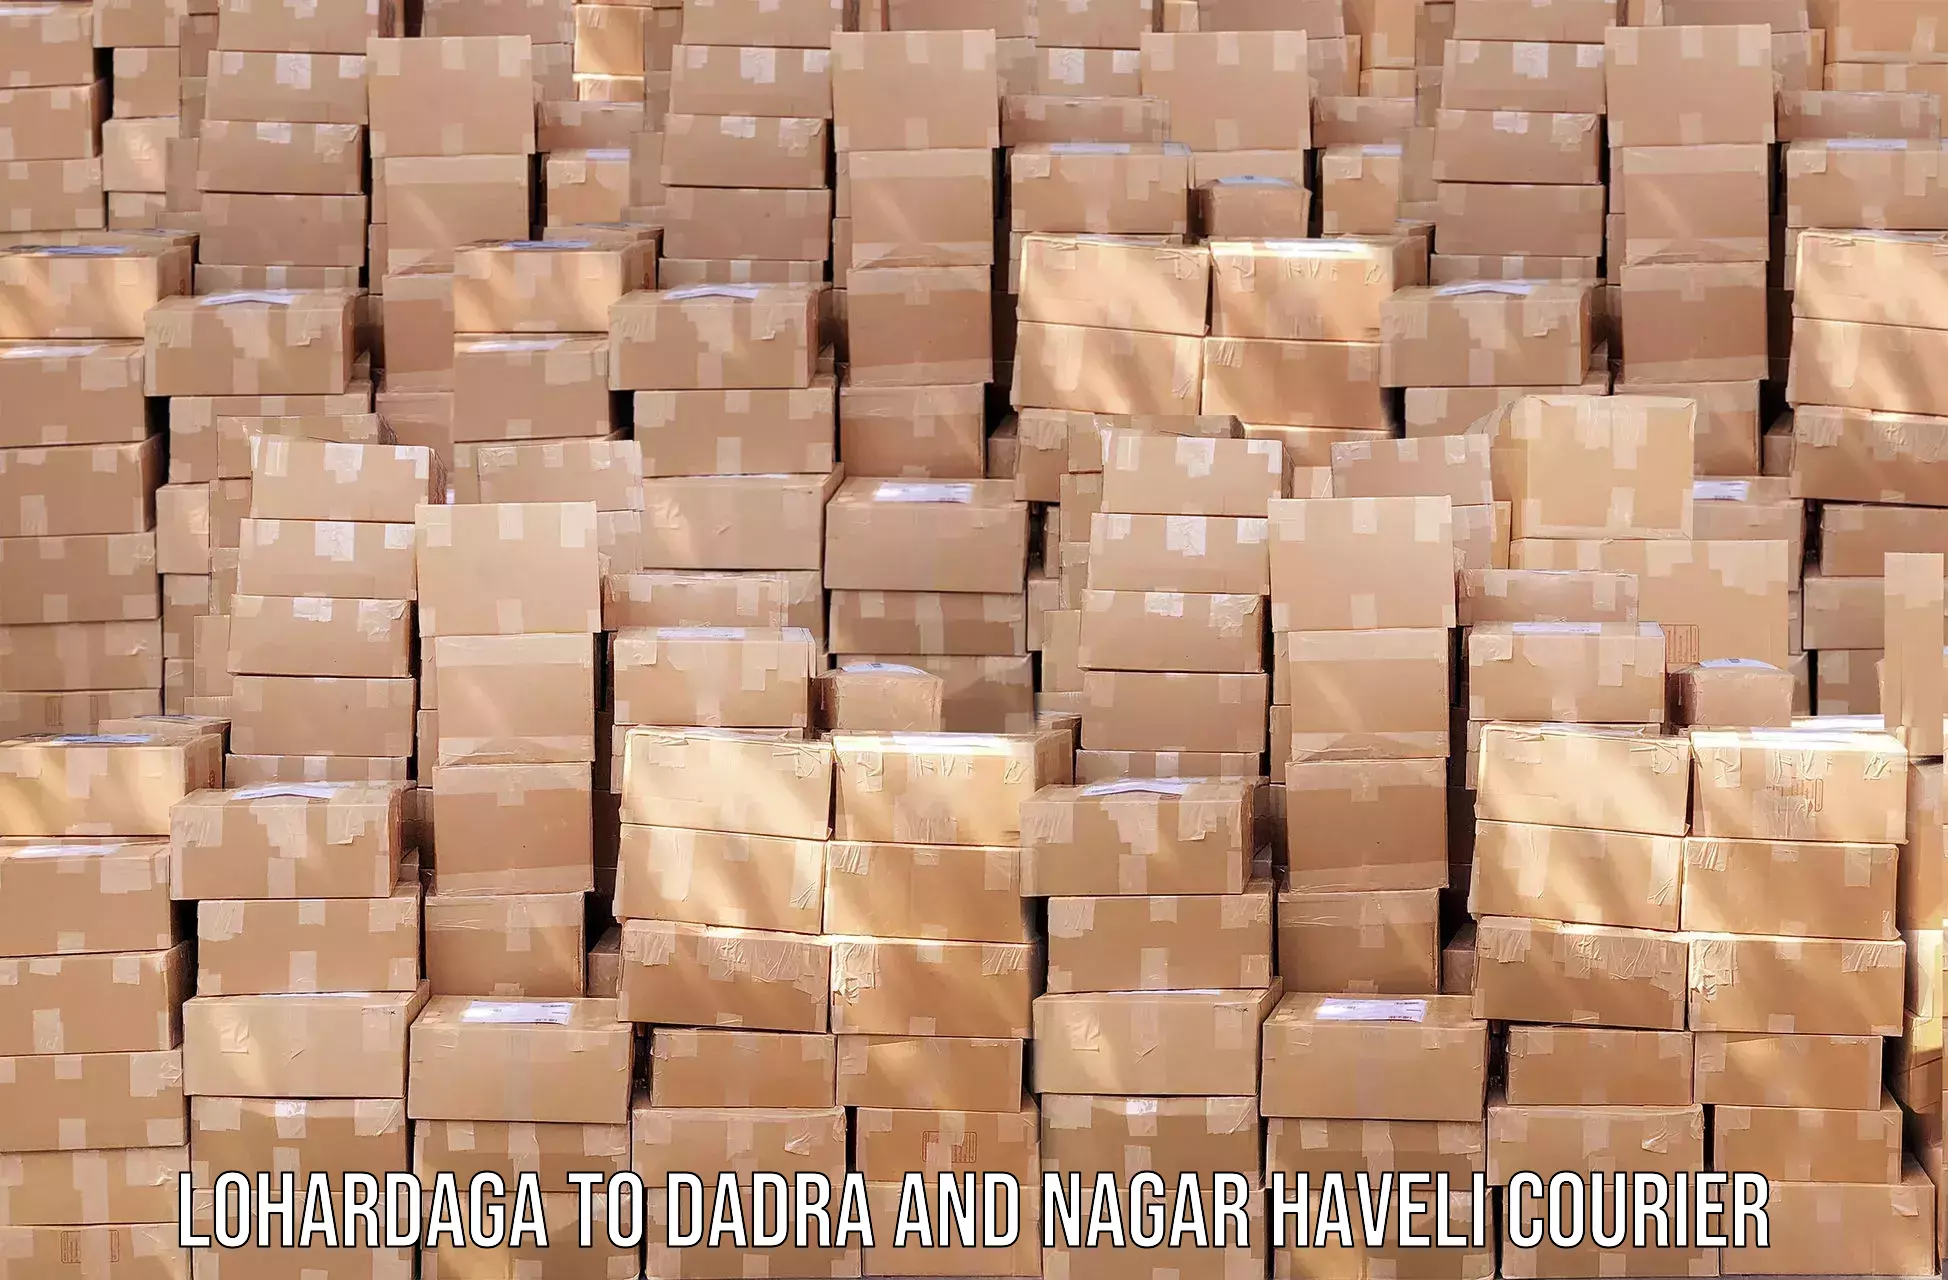 State-of-the-art courier technology Lohardaga to Dadra and Nagar Haveli